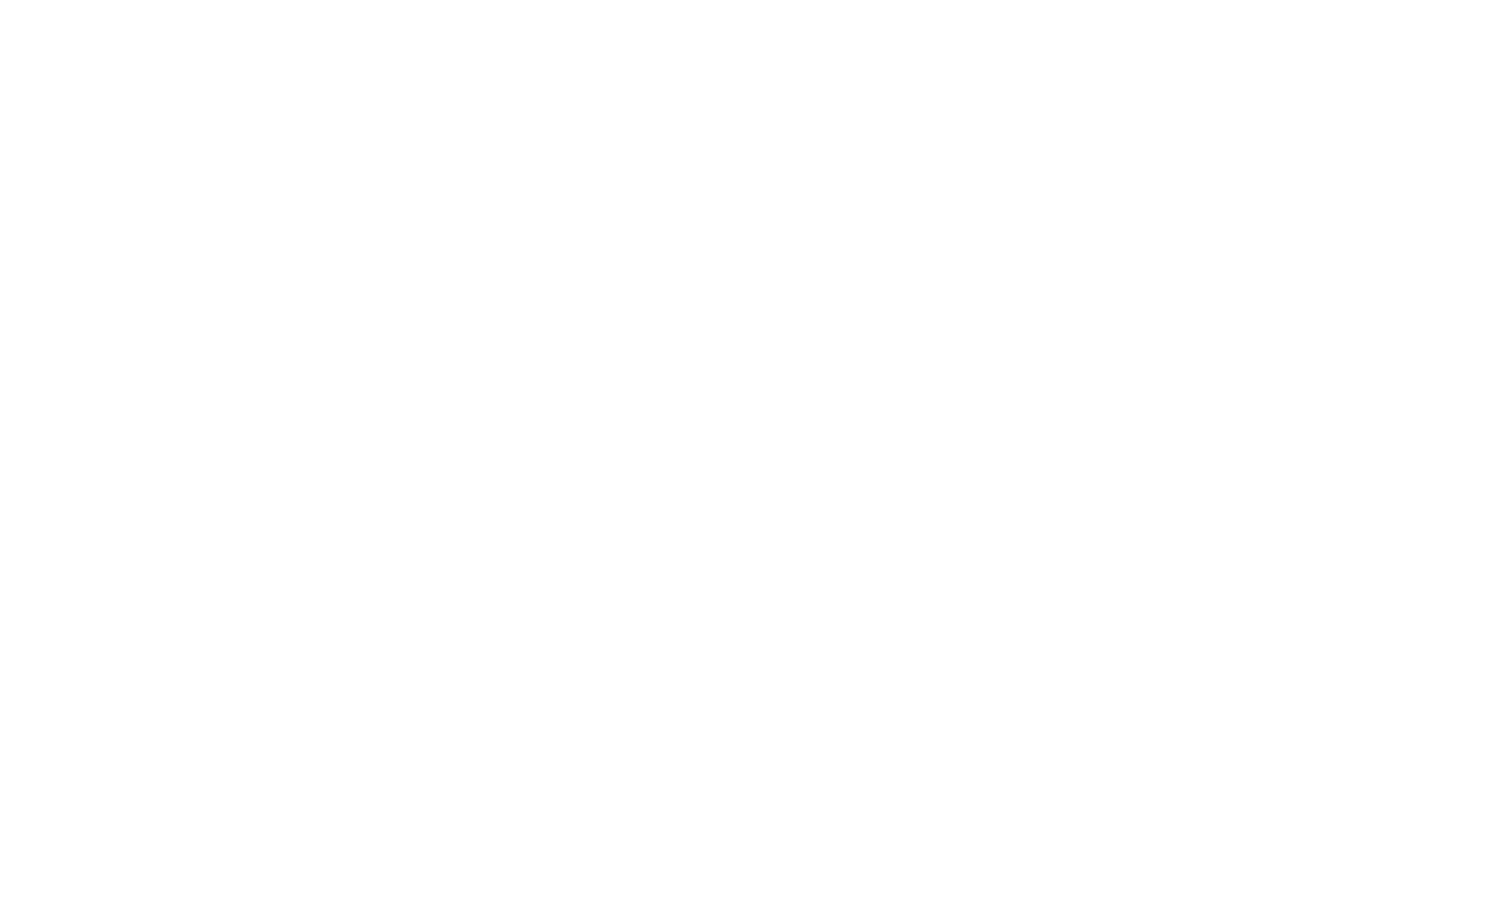 German Adventurer